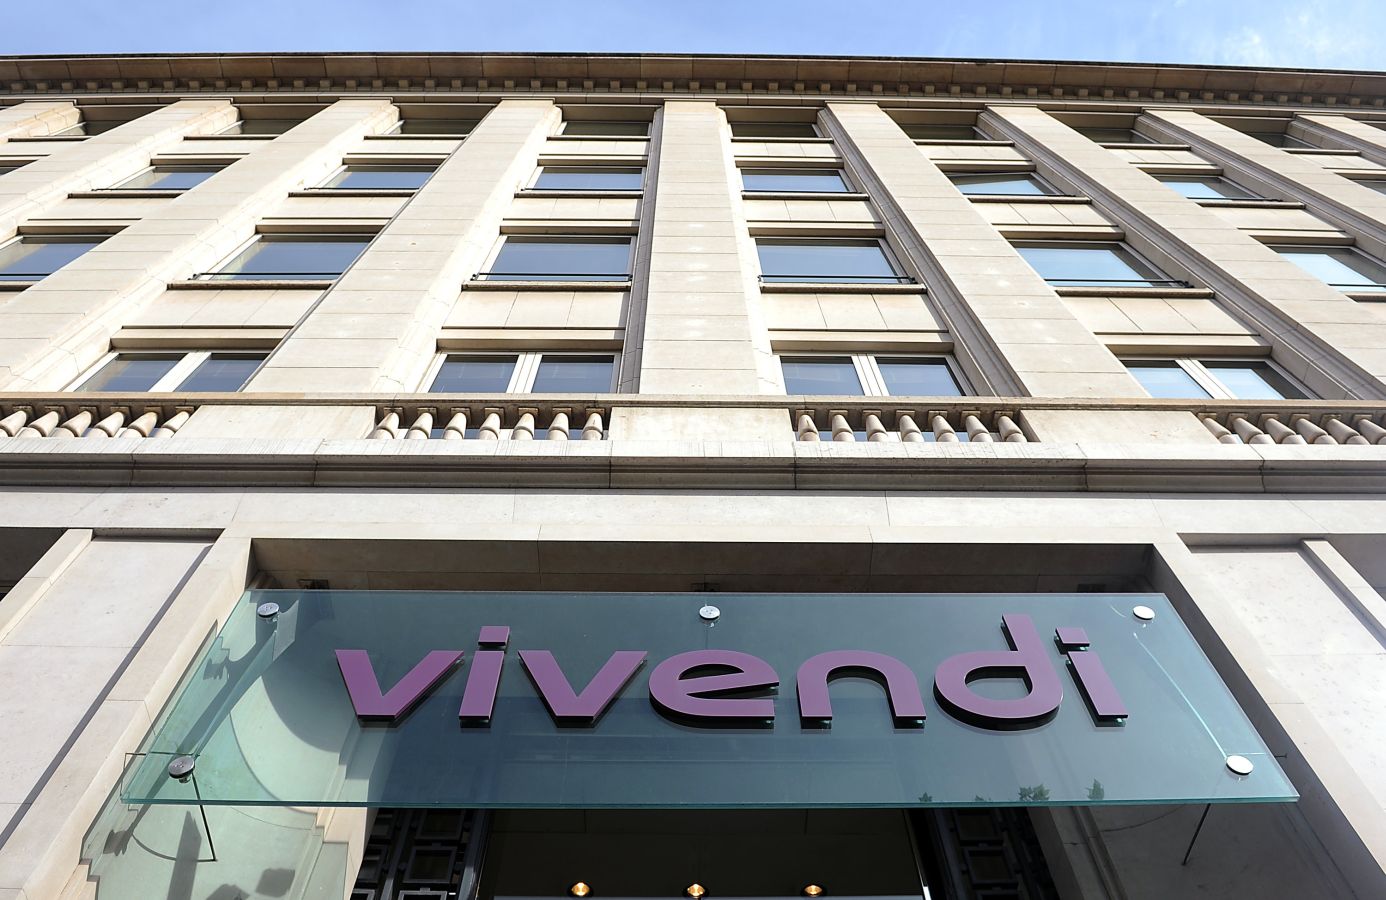 Mediaset, advisor al lavoro ma ad oggi nessuna proposta Vivendi. 